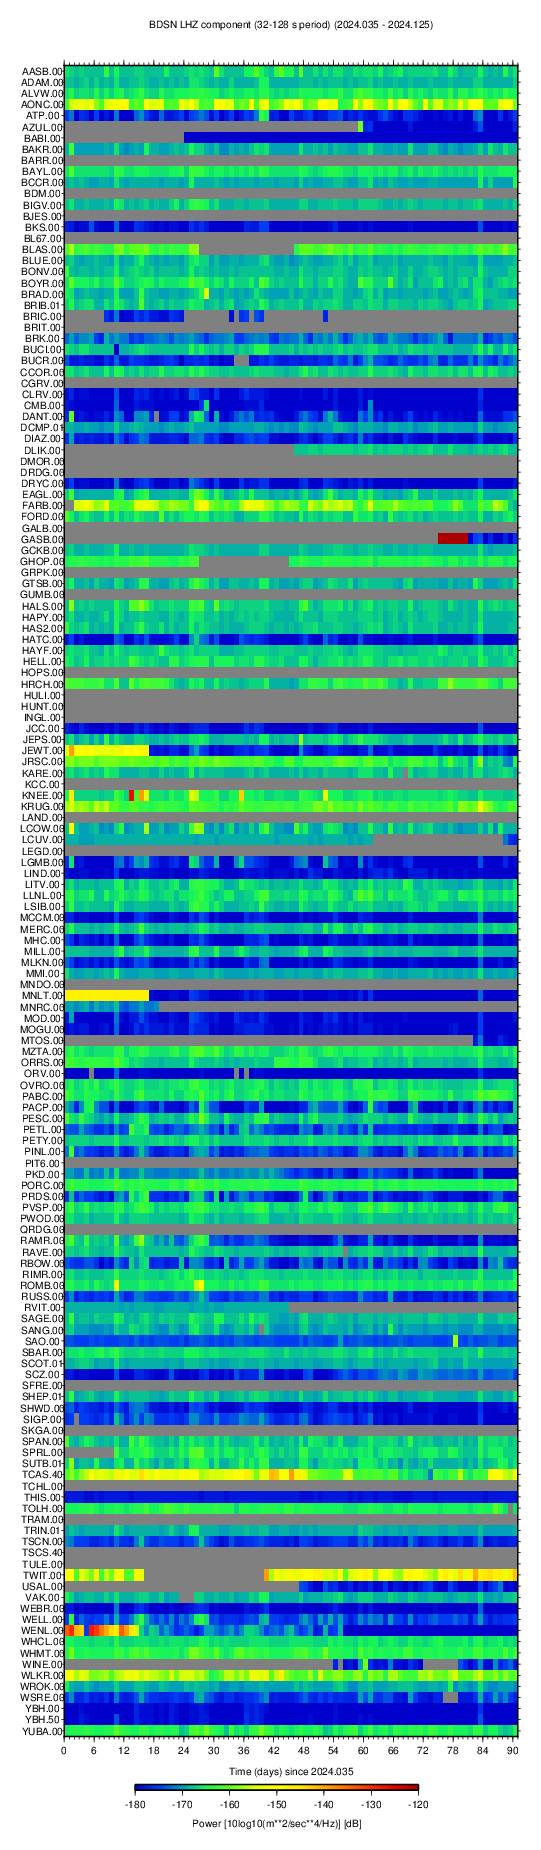 BDSN network Power Spectral Density plot